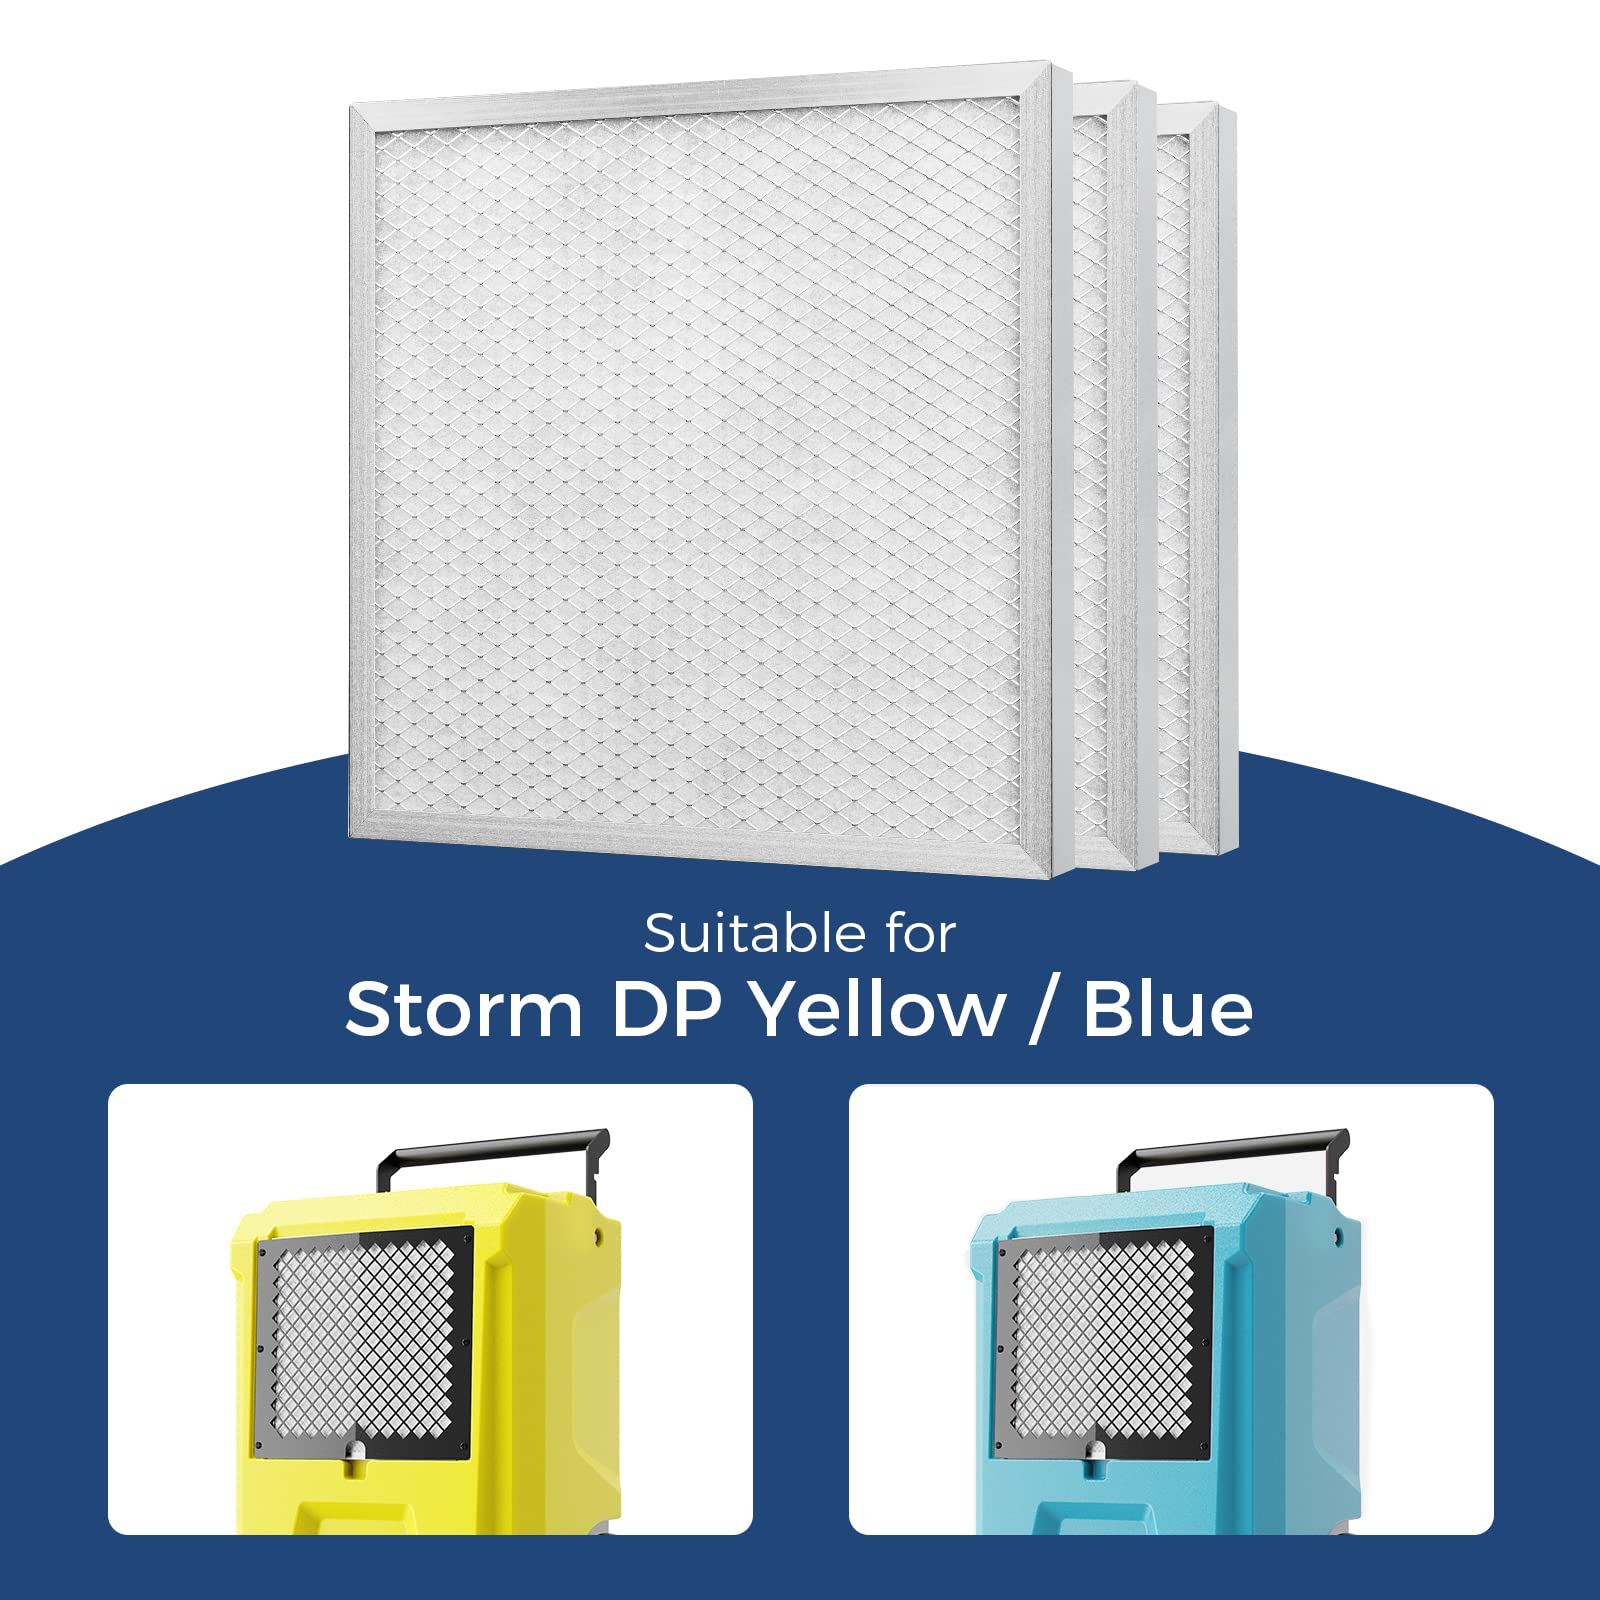 Keep your Storm DP dehumidifier clean with AlorAir MERV-8 filter